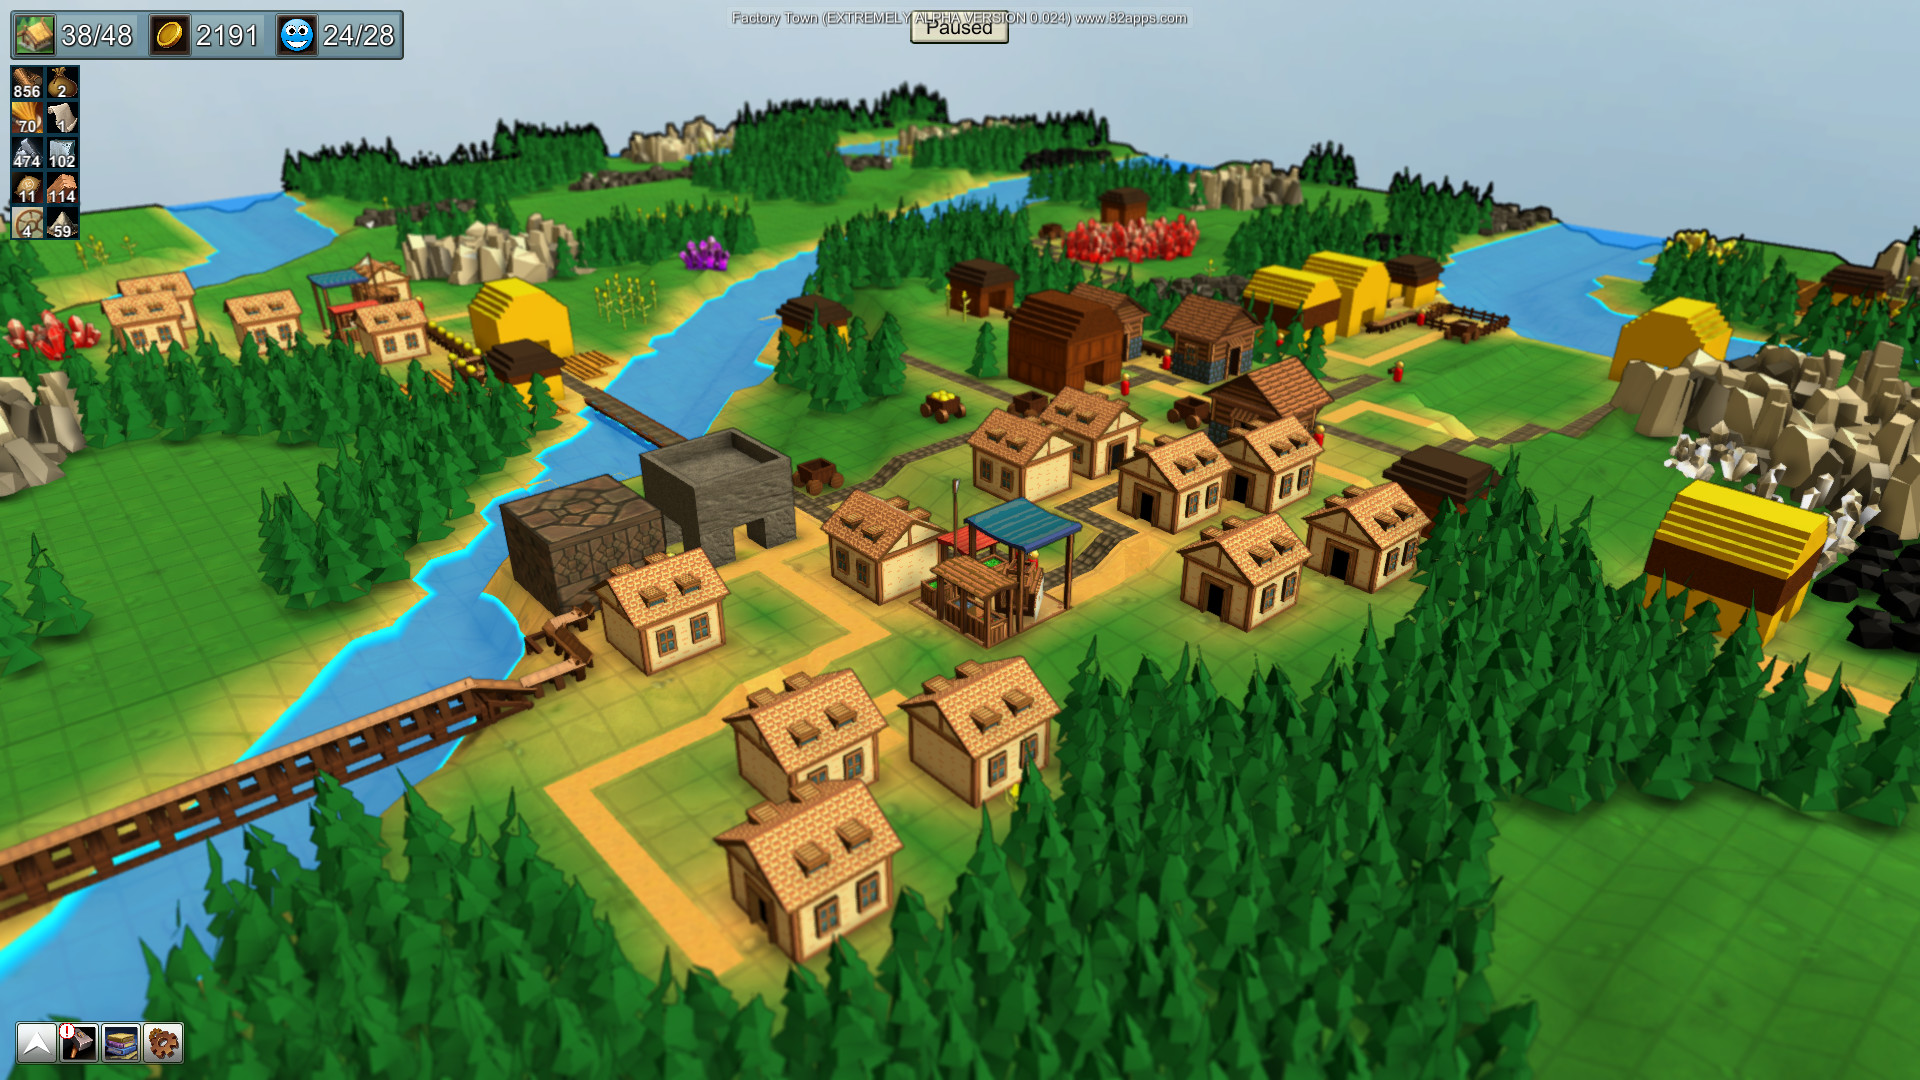 Screenshot Factory Town PC Game free download torrent